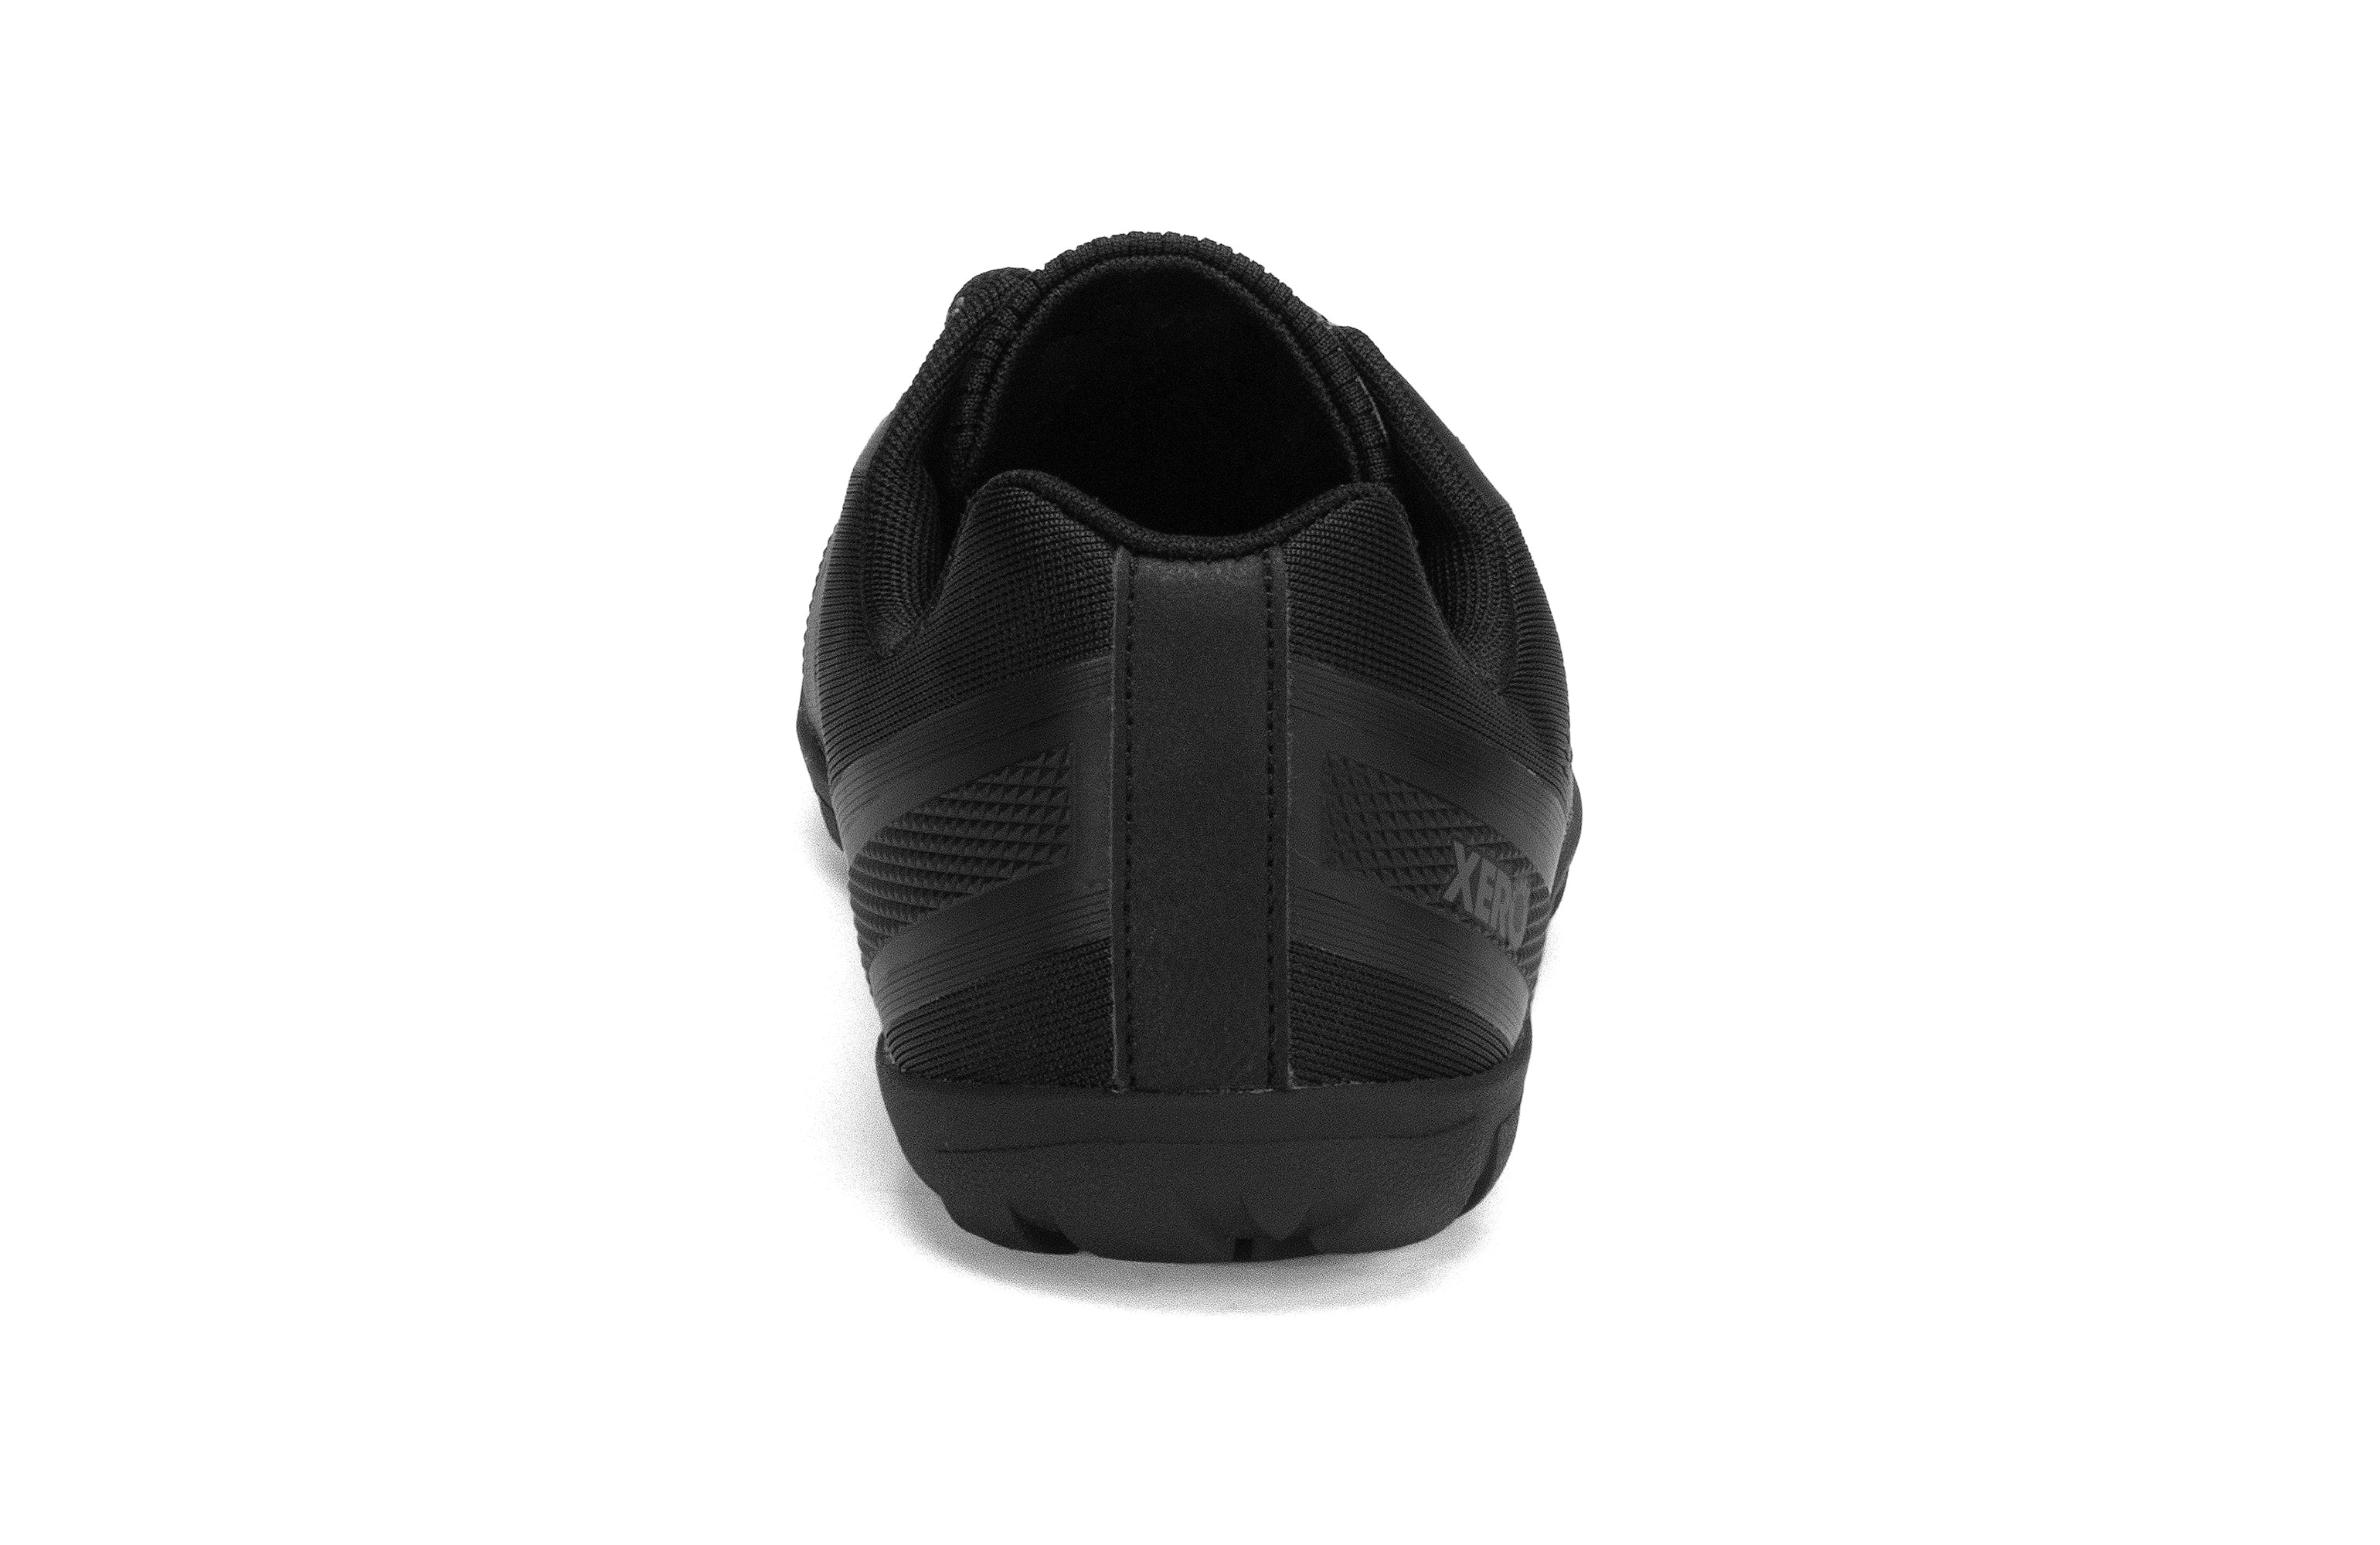 Xero Shoes Mesa Trail II Mens barfods vandresko til mænd i farven black, bagfra